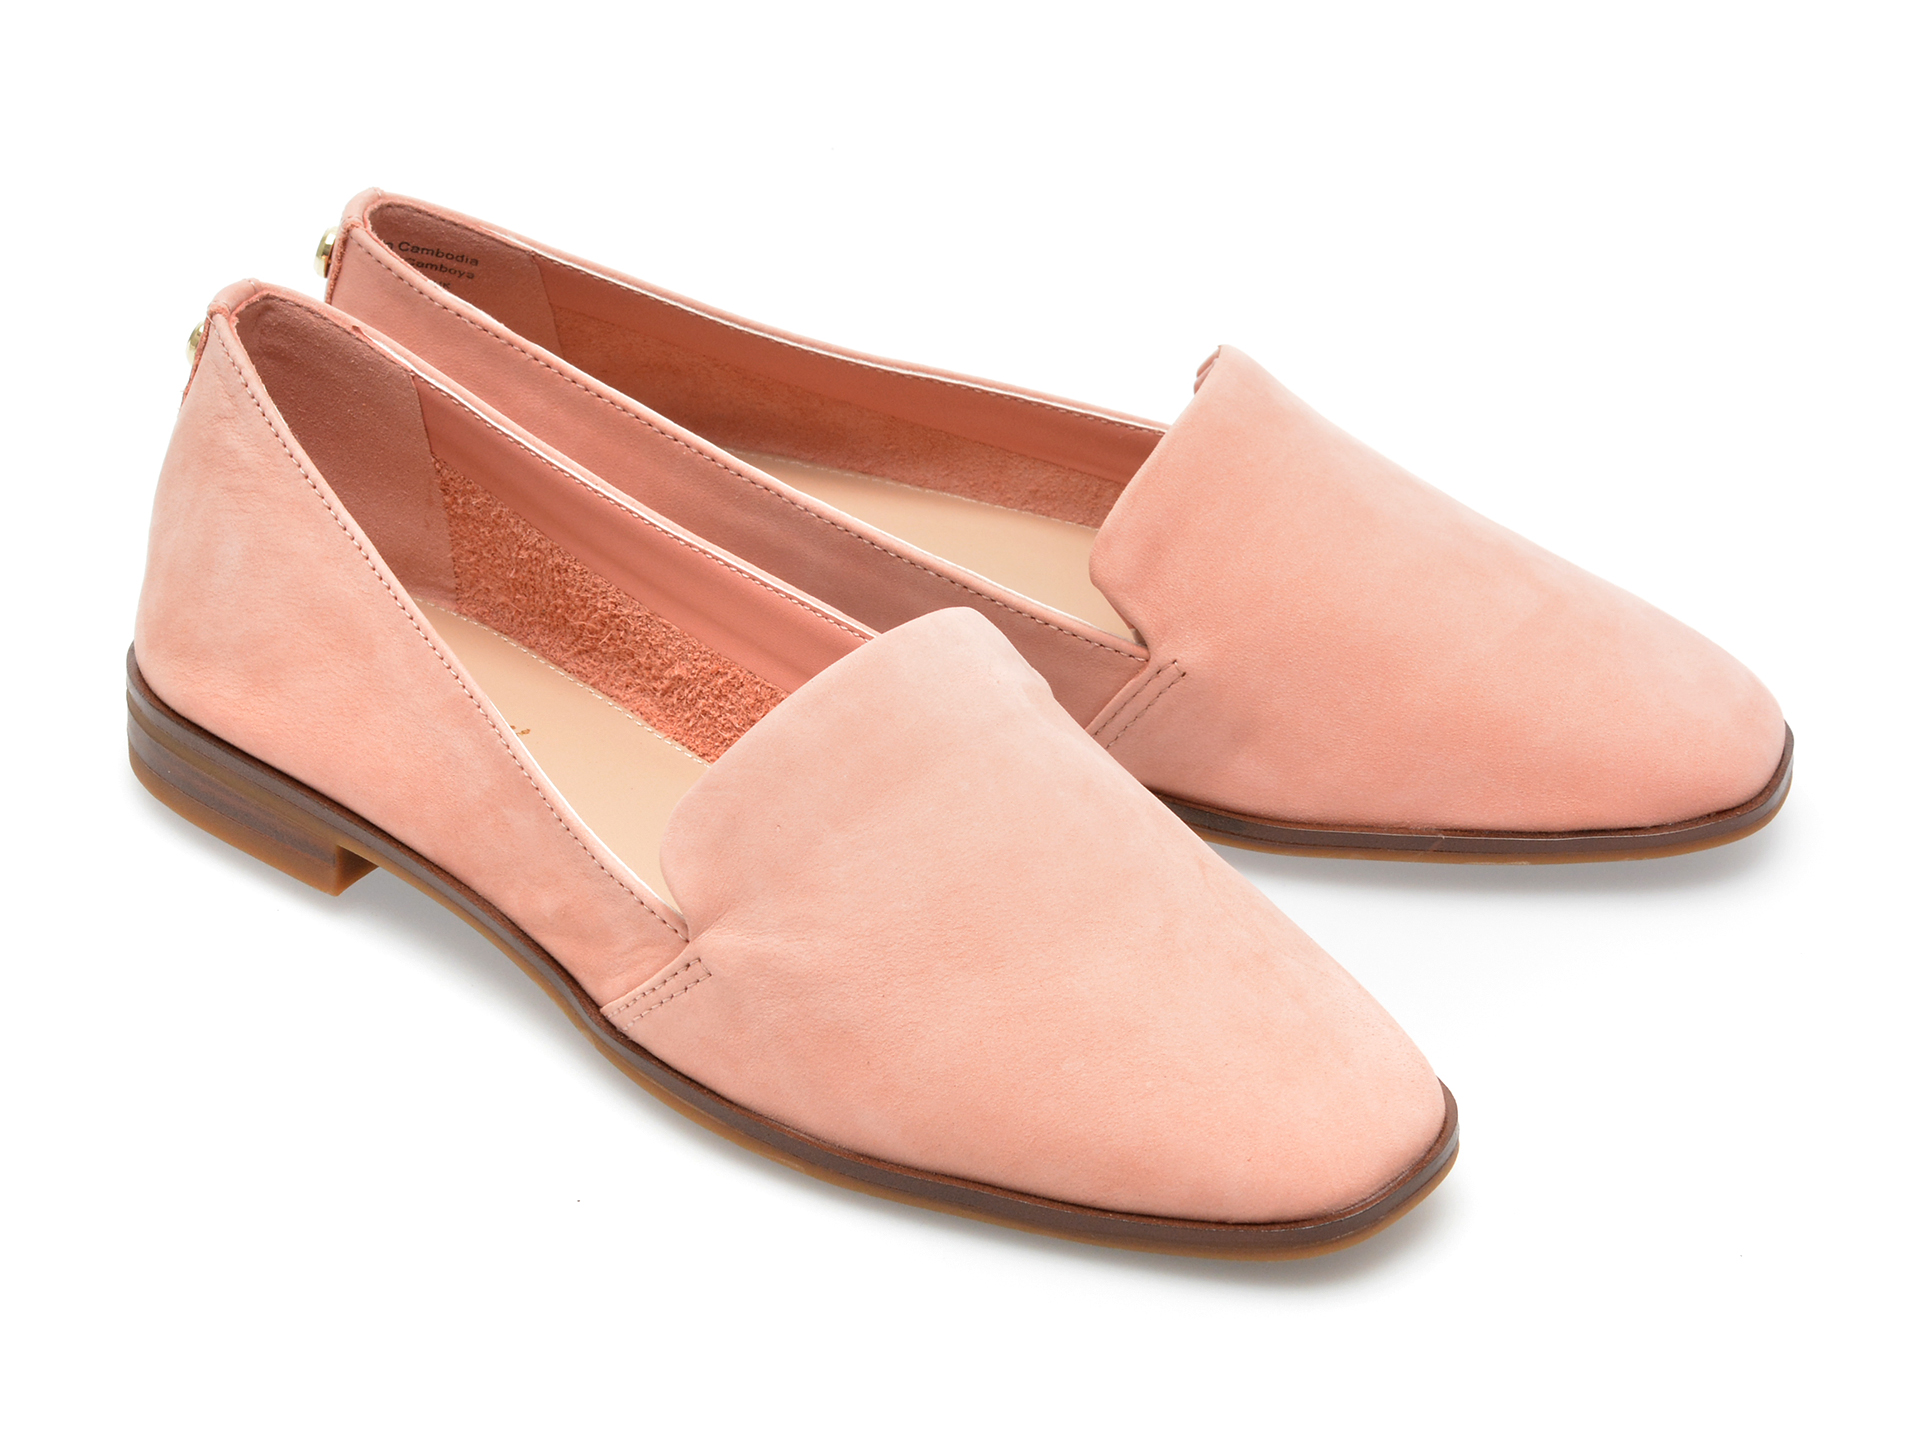 Poze Pantofi ALDO roz, VEADITH660, din nabuc